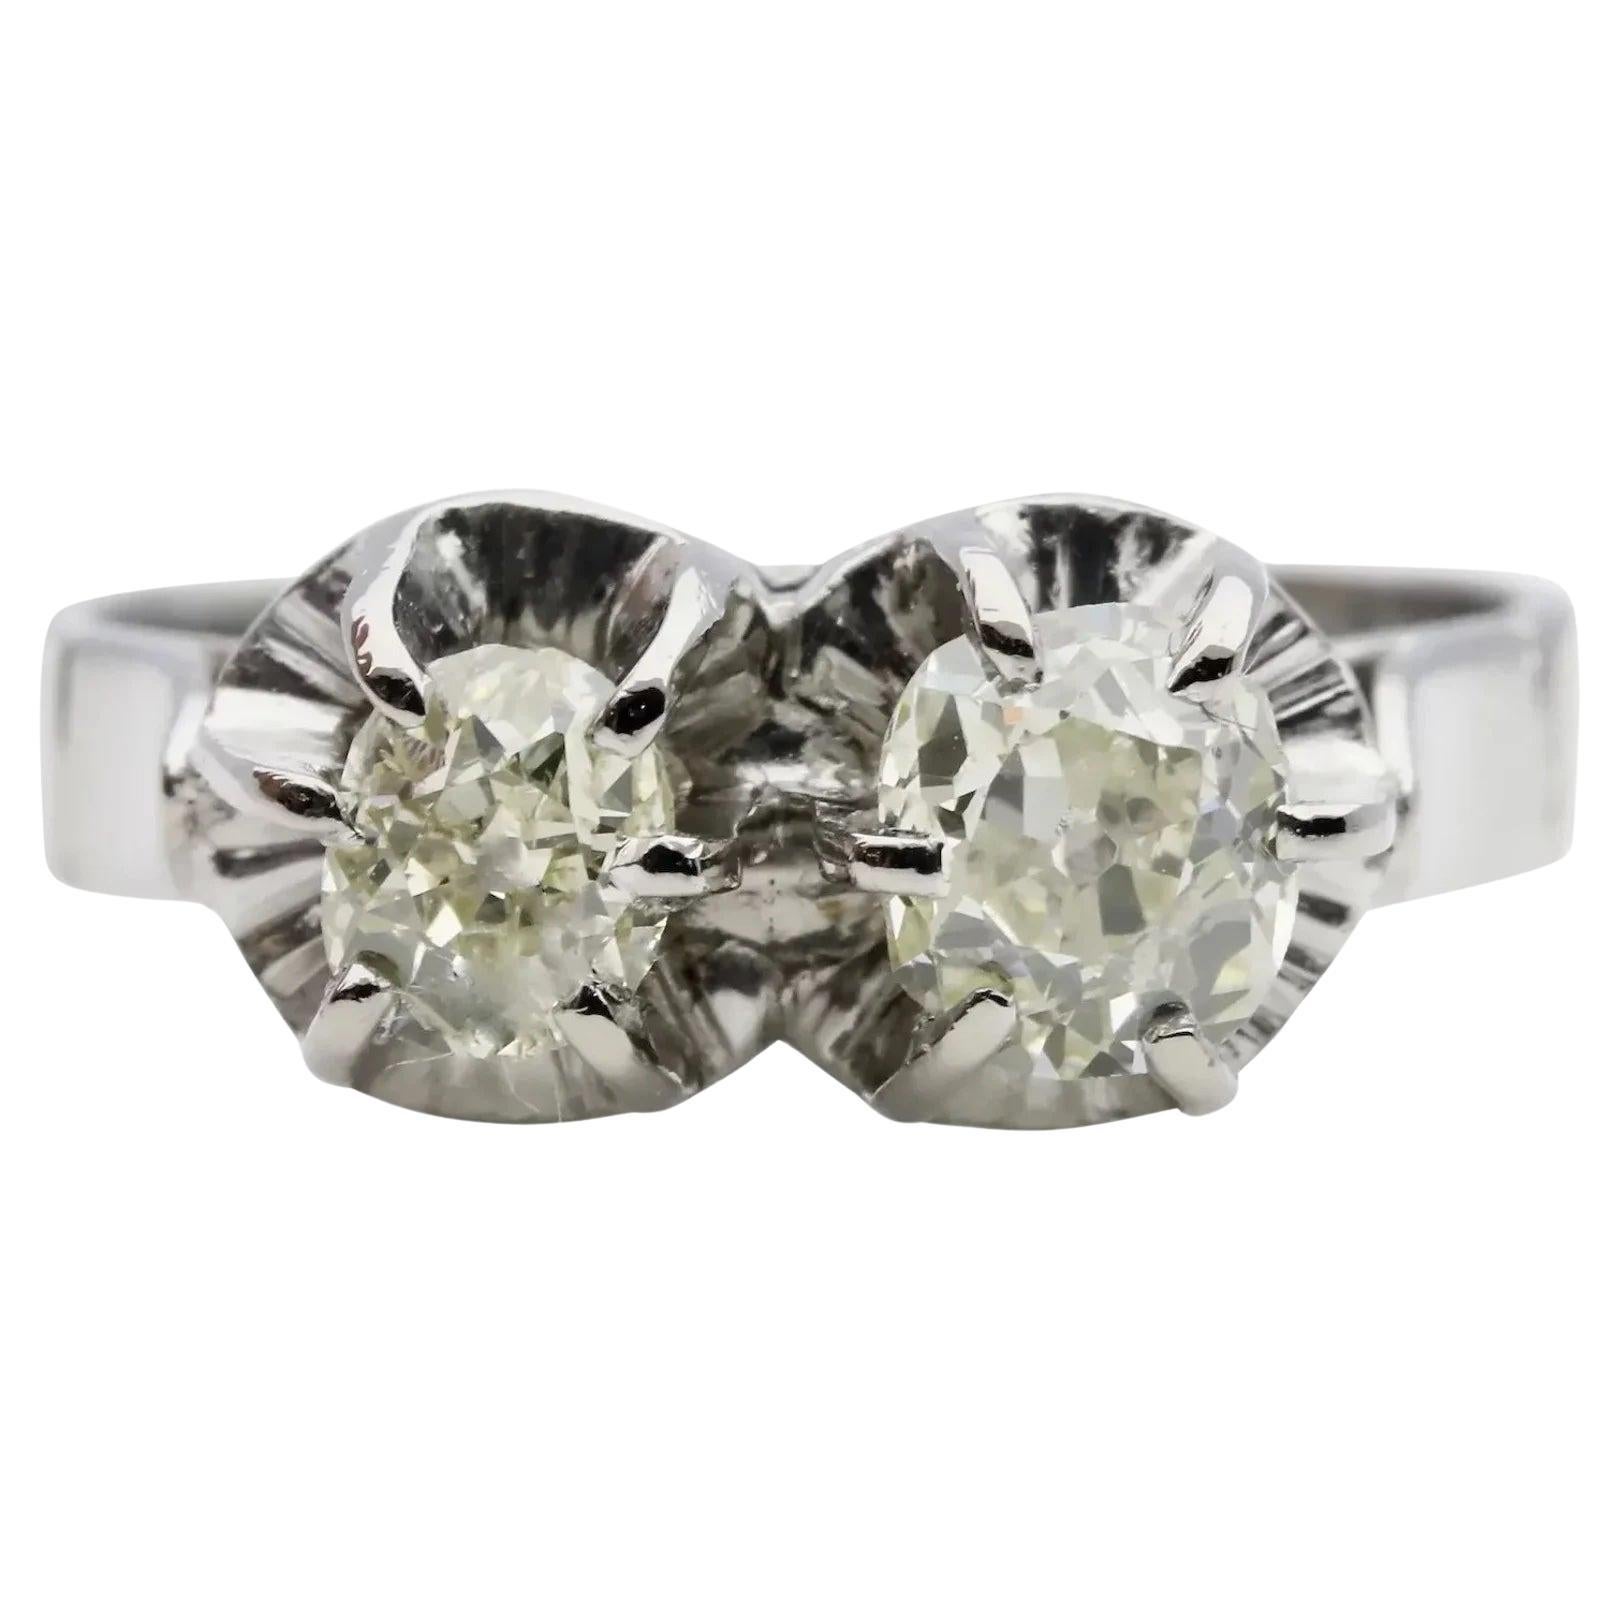  Art Deco Toi et Moi 0.97 Carat Old Mine Cut Diamond Ring in 18K White Gold